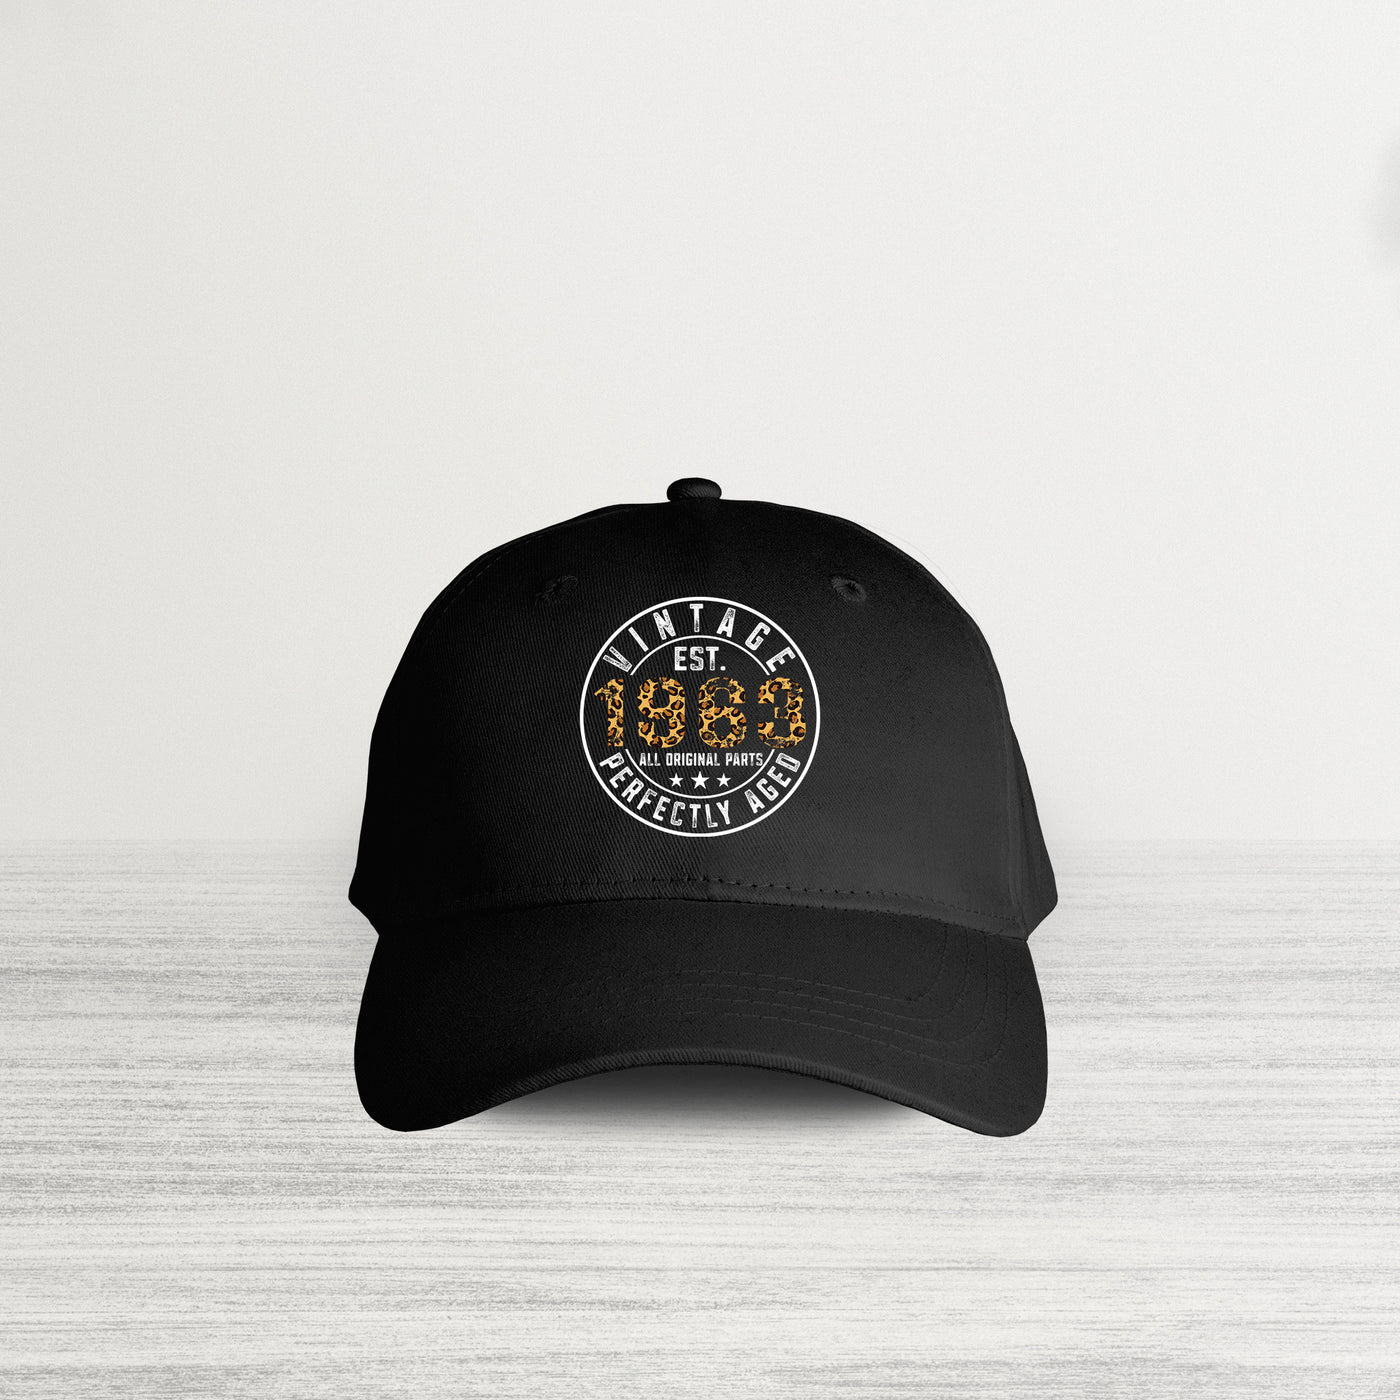 Vintage 1963 C HAT